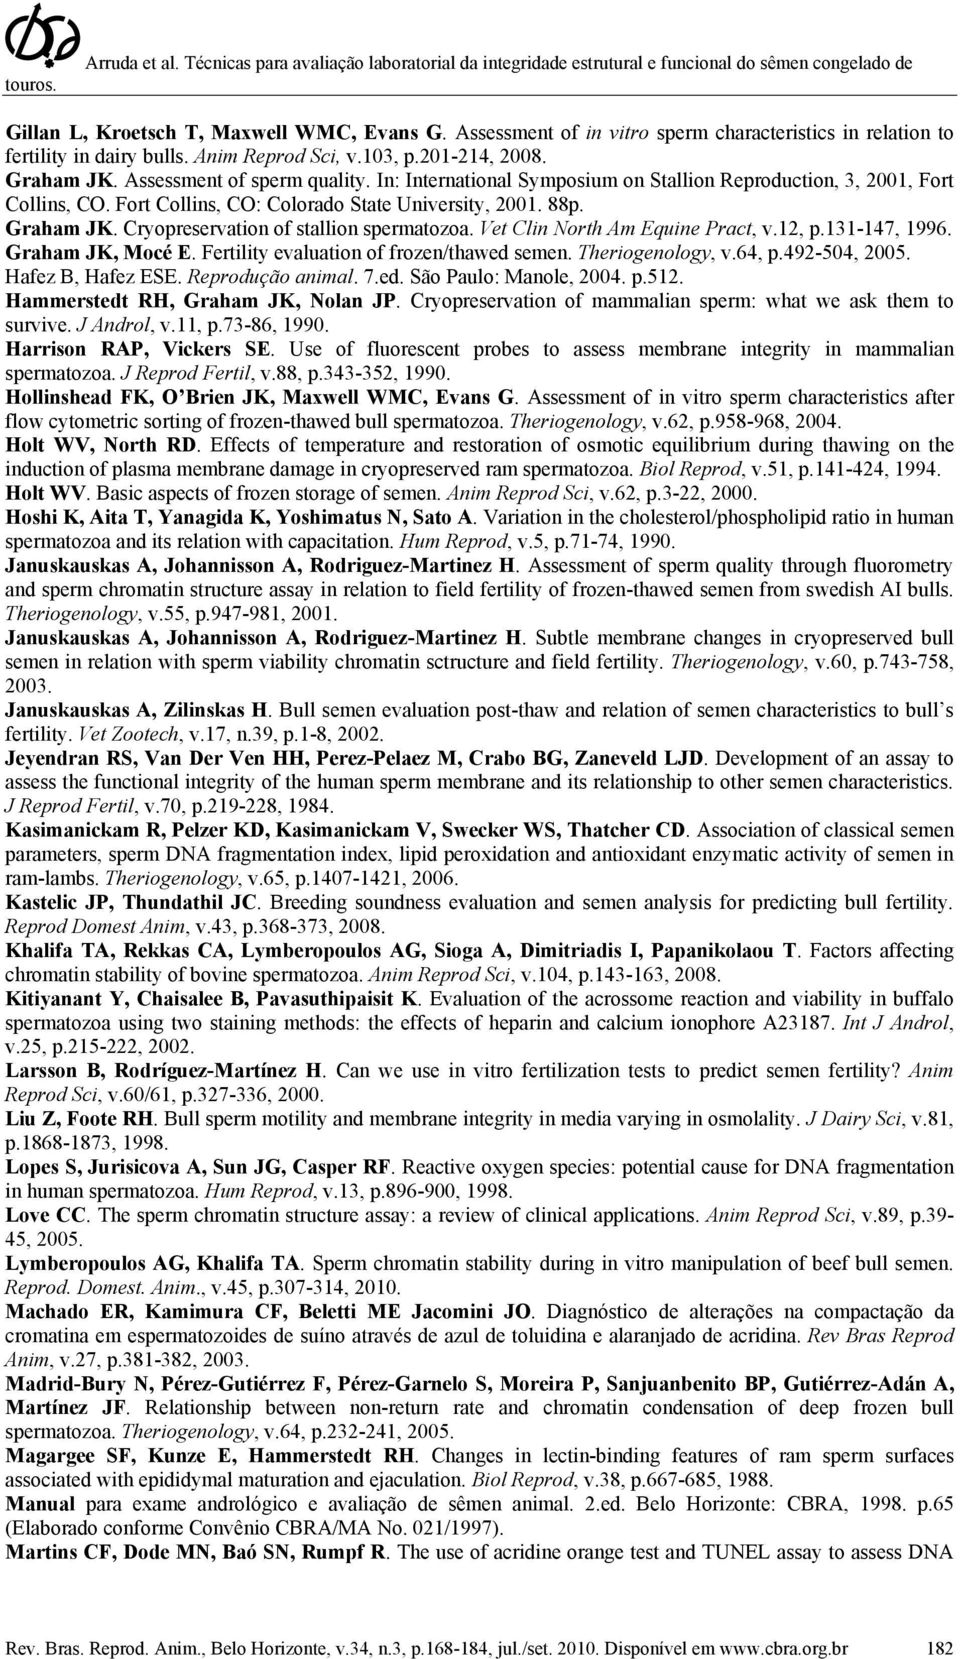 Cryopreservation of stallion spermatozoa. Vet Clin North Am Equine Pract, v.12, p.131-147, 1996. Graham JK, Mocé E. Fertility evaluation of frozen/thawed semen. Theriogenology, v.64, p.492-504, 2005.